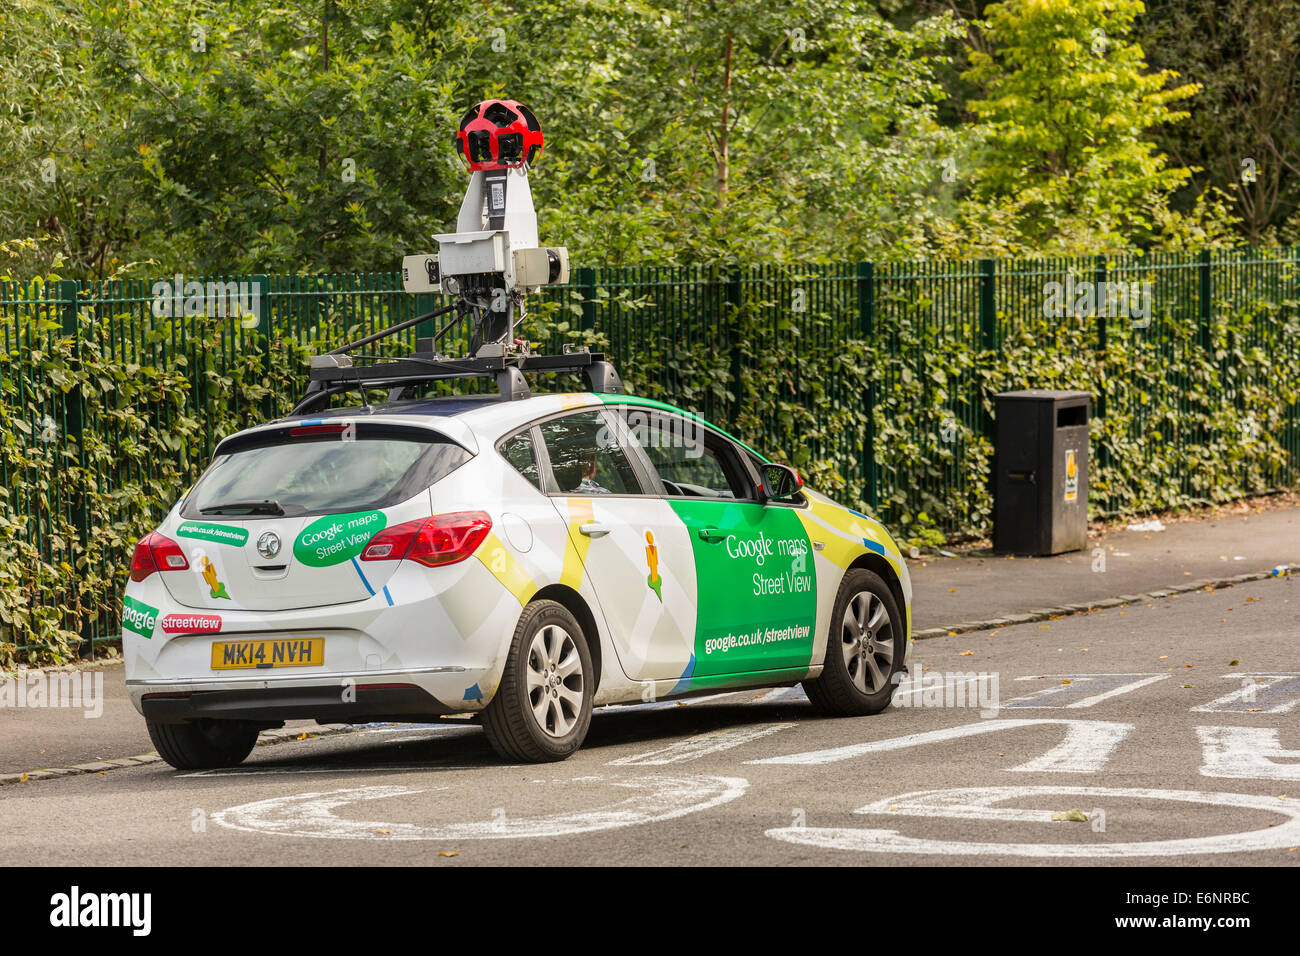 Google Street View Auto Mit Kamera Auf Dach Glasgow Schottland Uk Stockfotografie Alamy